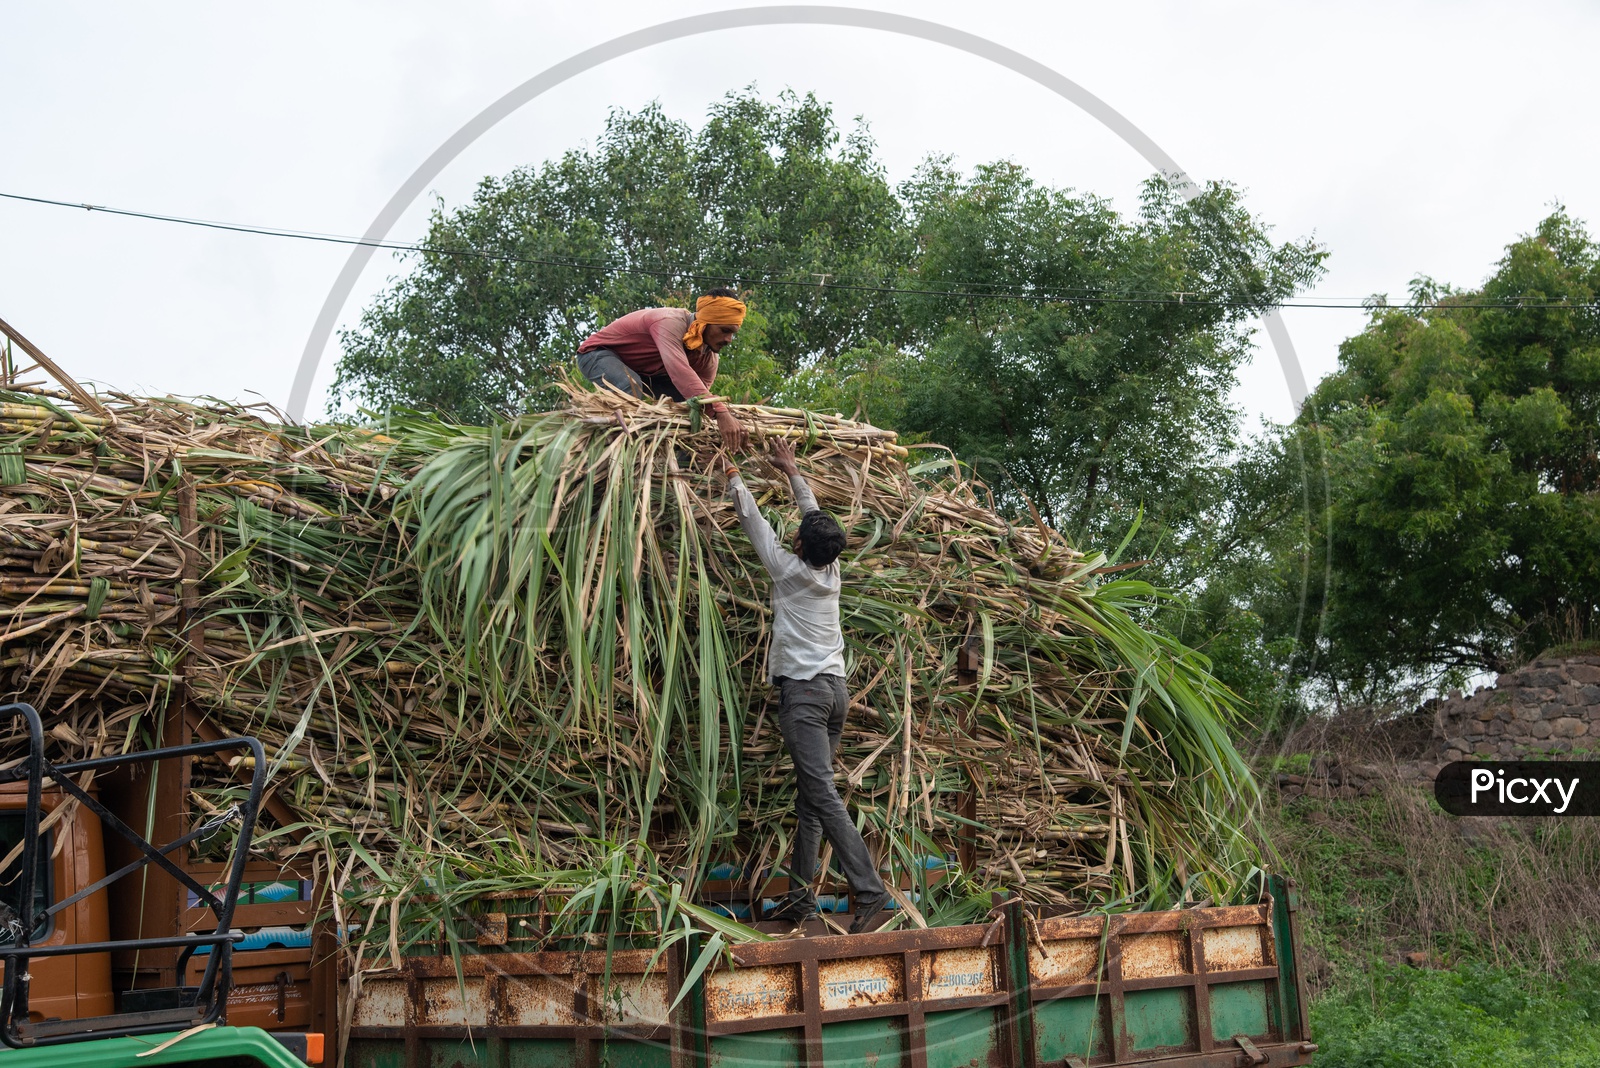 Farmers loading Sugarcane crop onto trucks